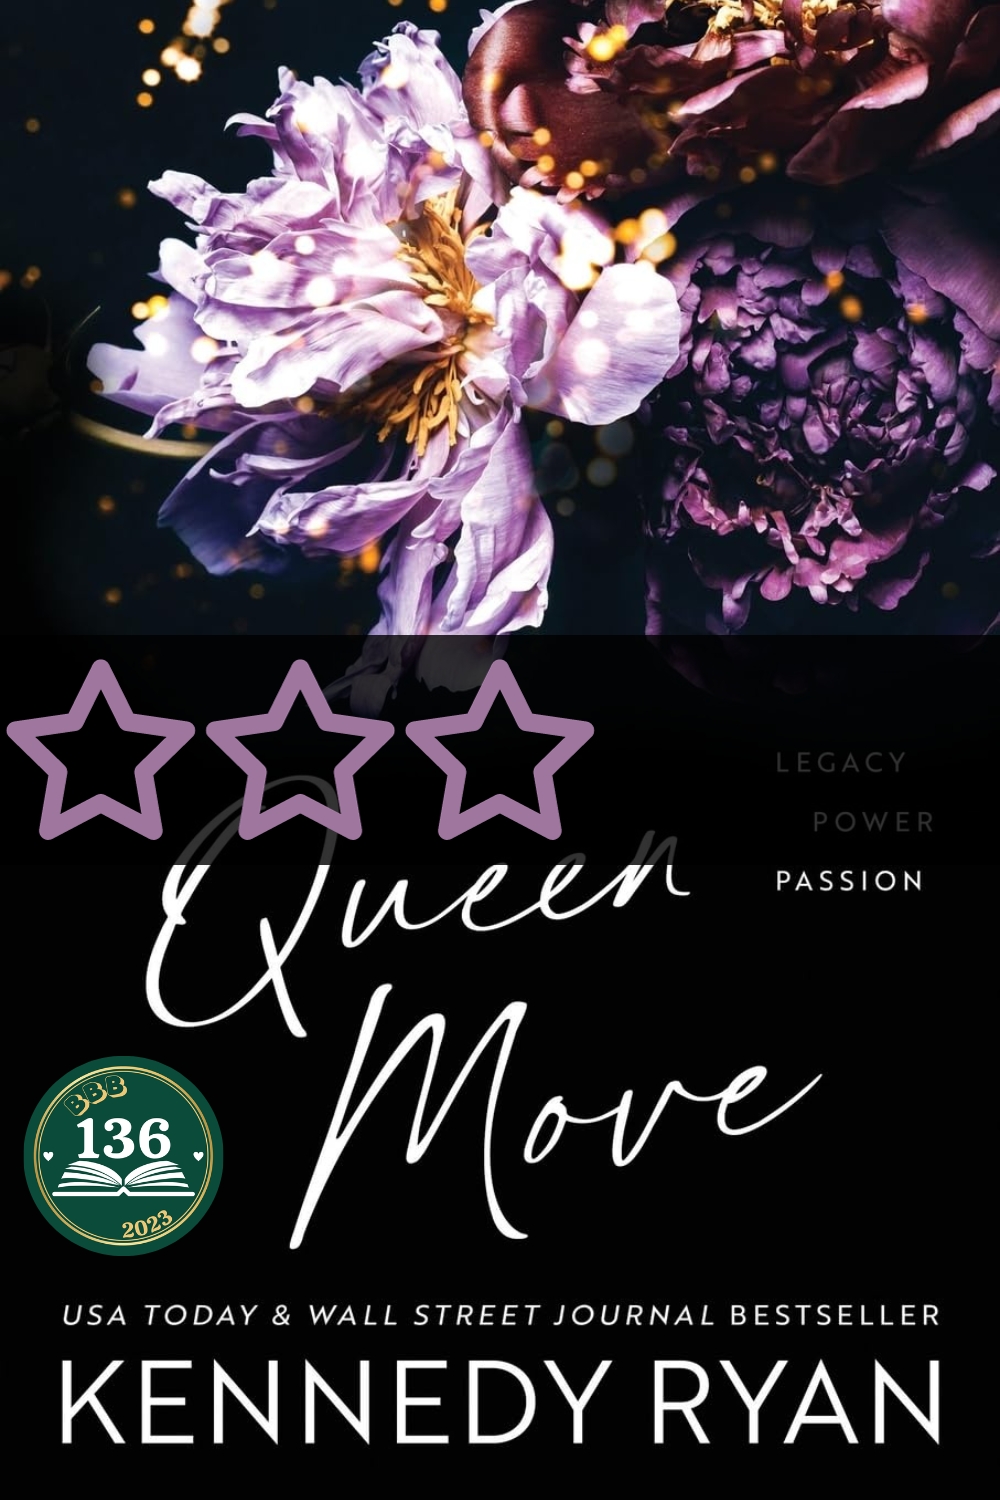 Queen Move – Kennedy Ryan